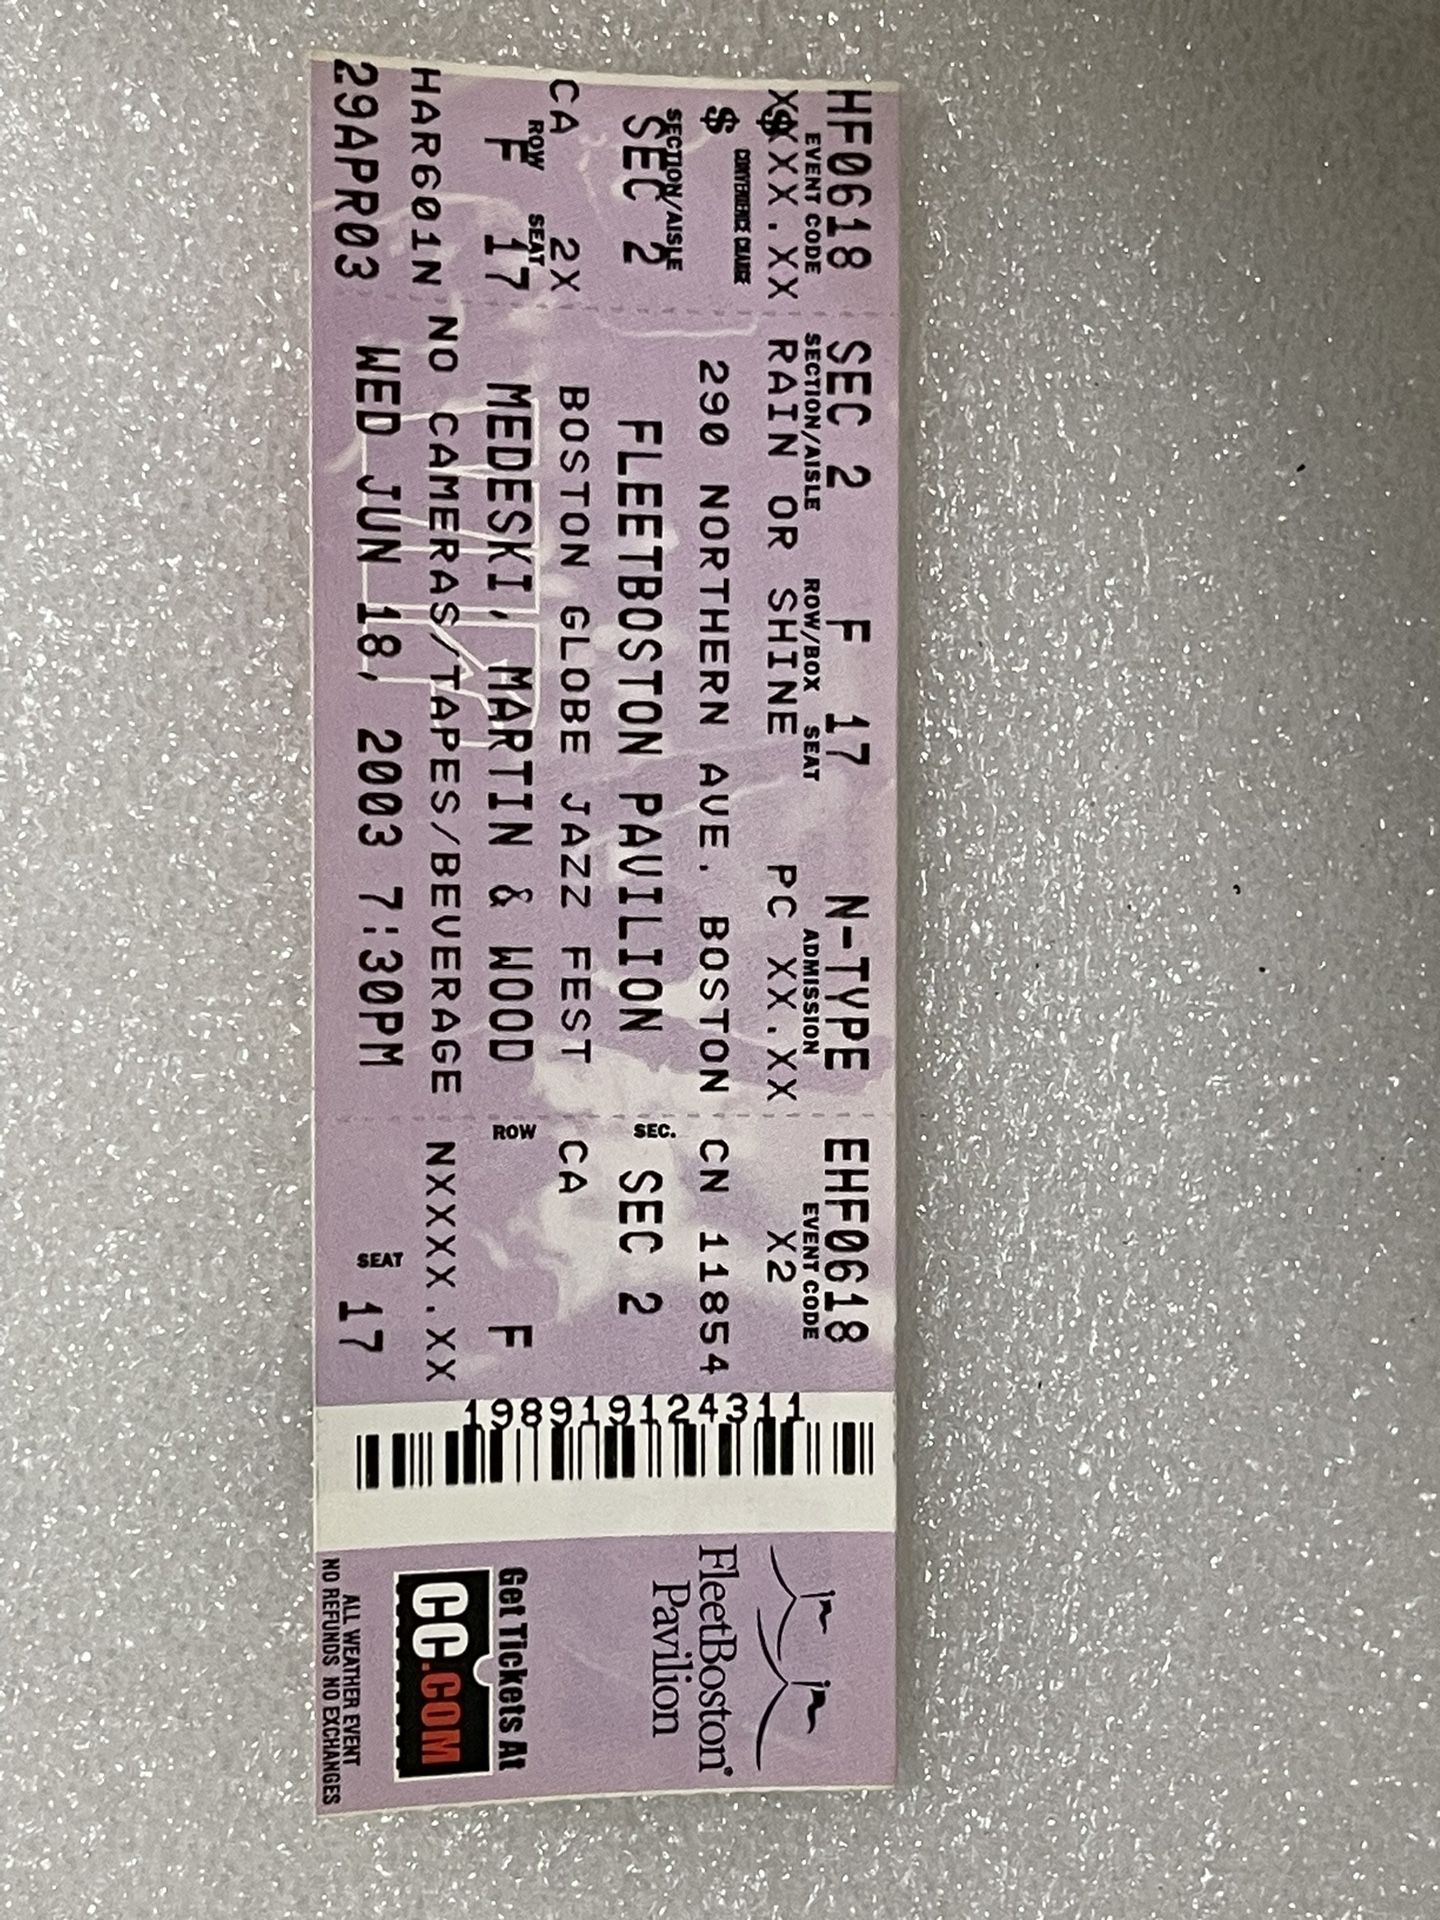 Boston Globe Jazz Fest- Medeski, Martin, & Wood Unused Concert Ticket 2003